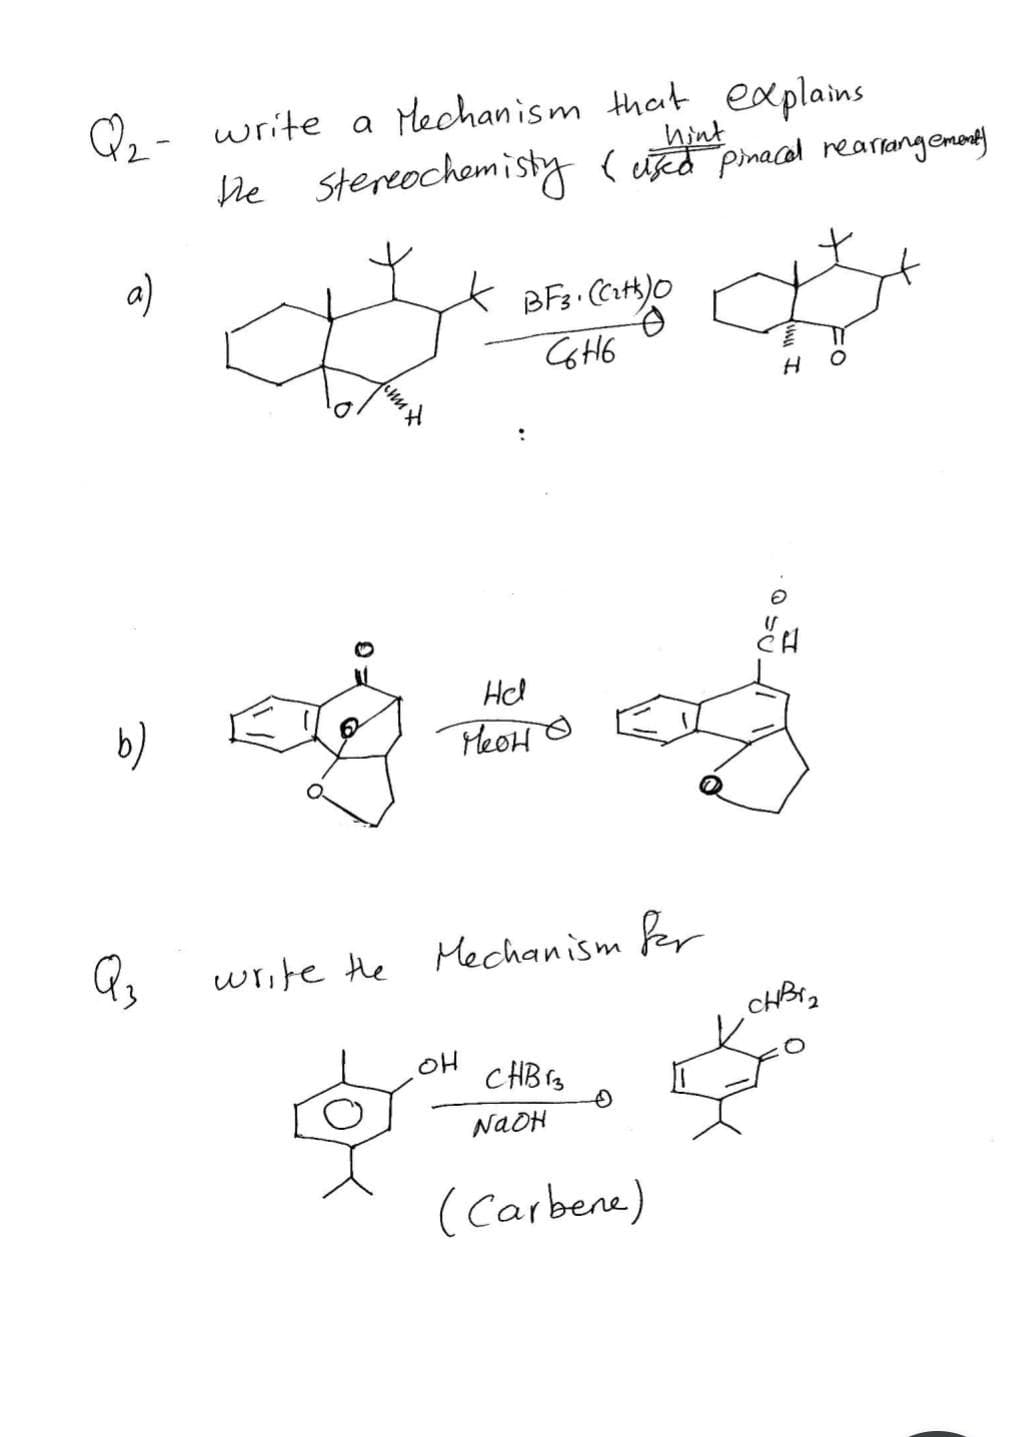 Q, -
write a Mechanism that explains
hint
he stereochemisty (sed pmacal rearangemendy
a)
CotH6
fonn
Hcl
b)
HeoH O
wr,te he Mechanism fer
OH
CHBrg
NAOH
(Carbene)
